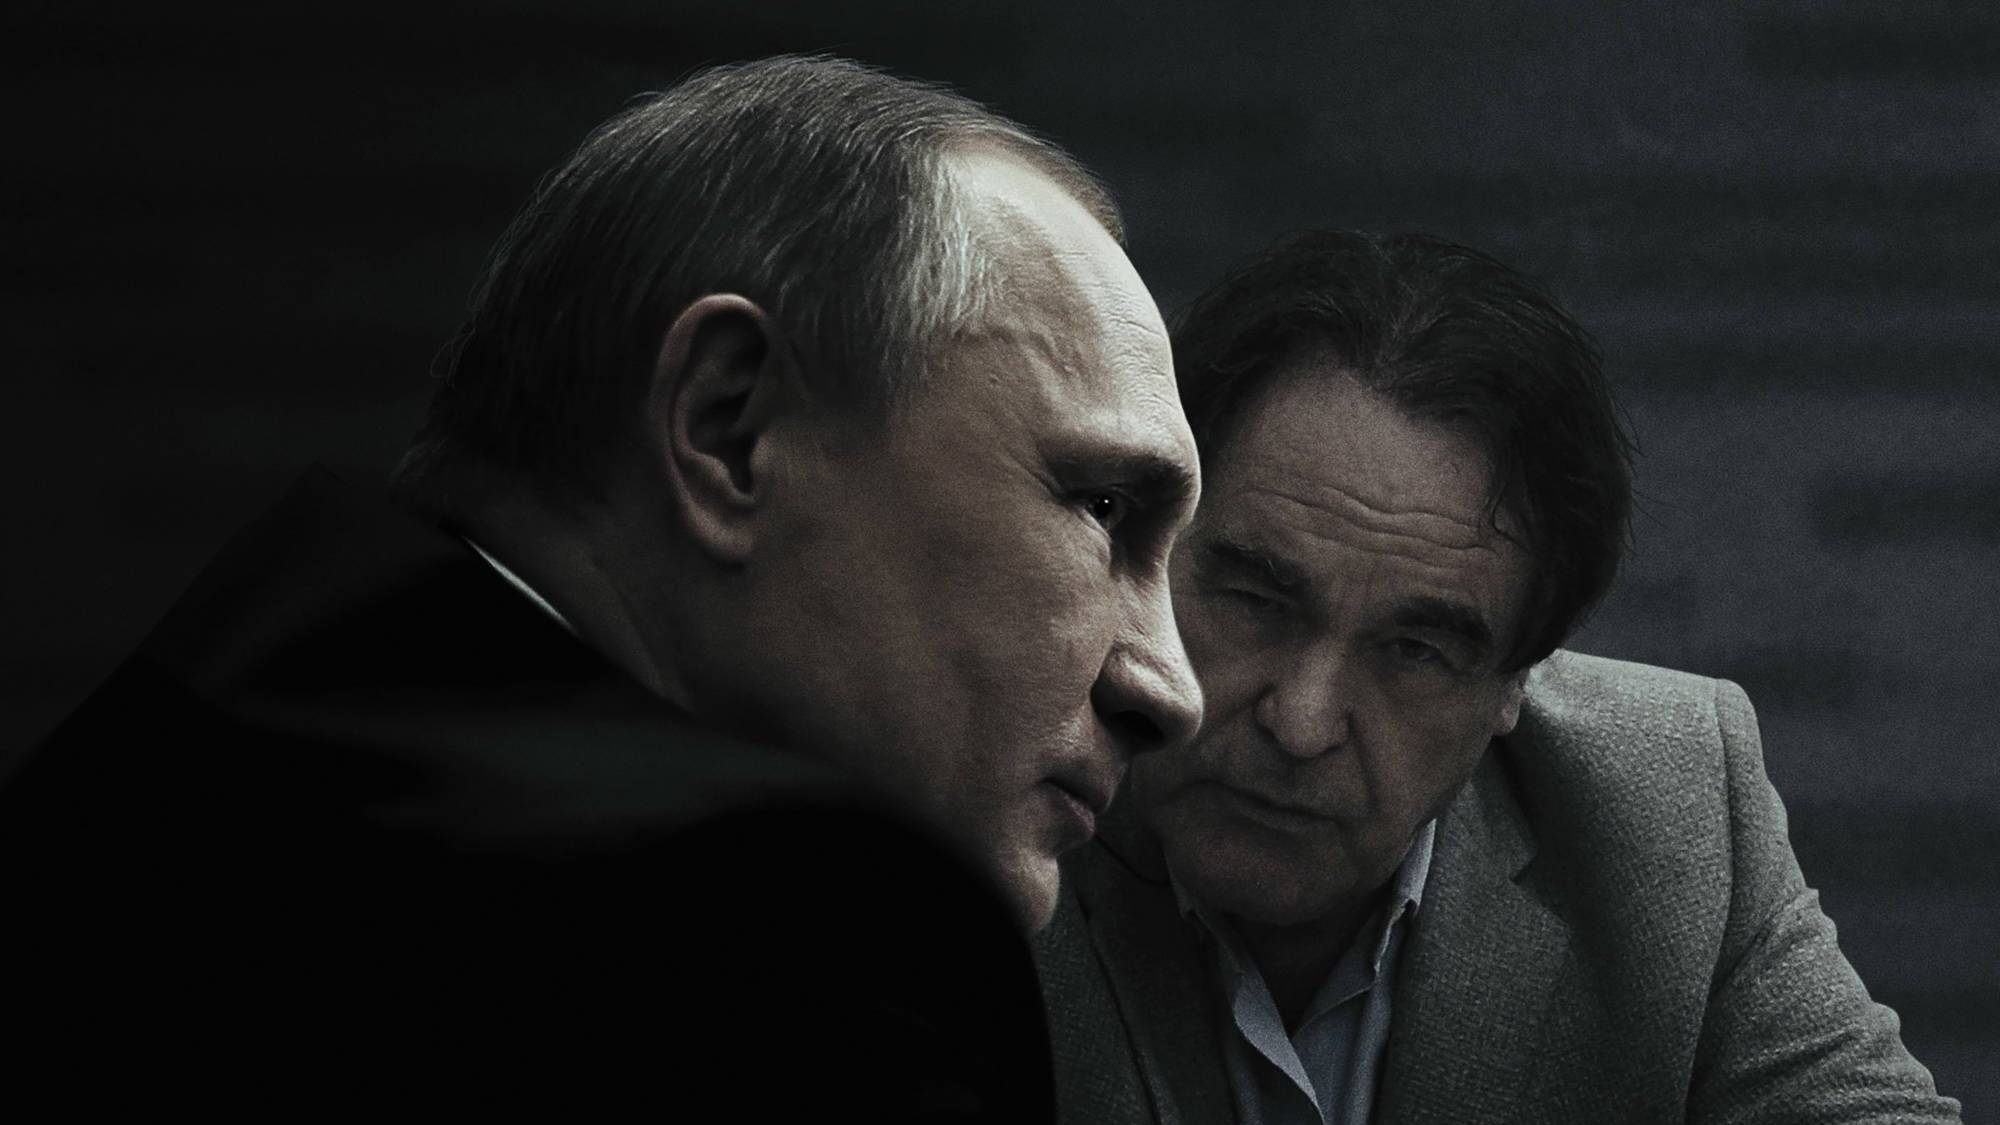 Cubierta de Oliver Stone: Entrevistas a Putin